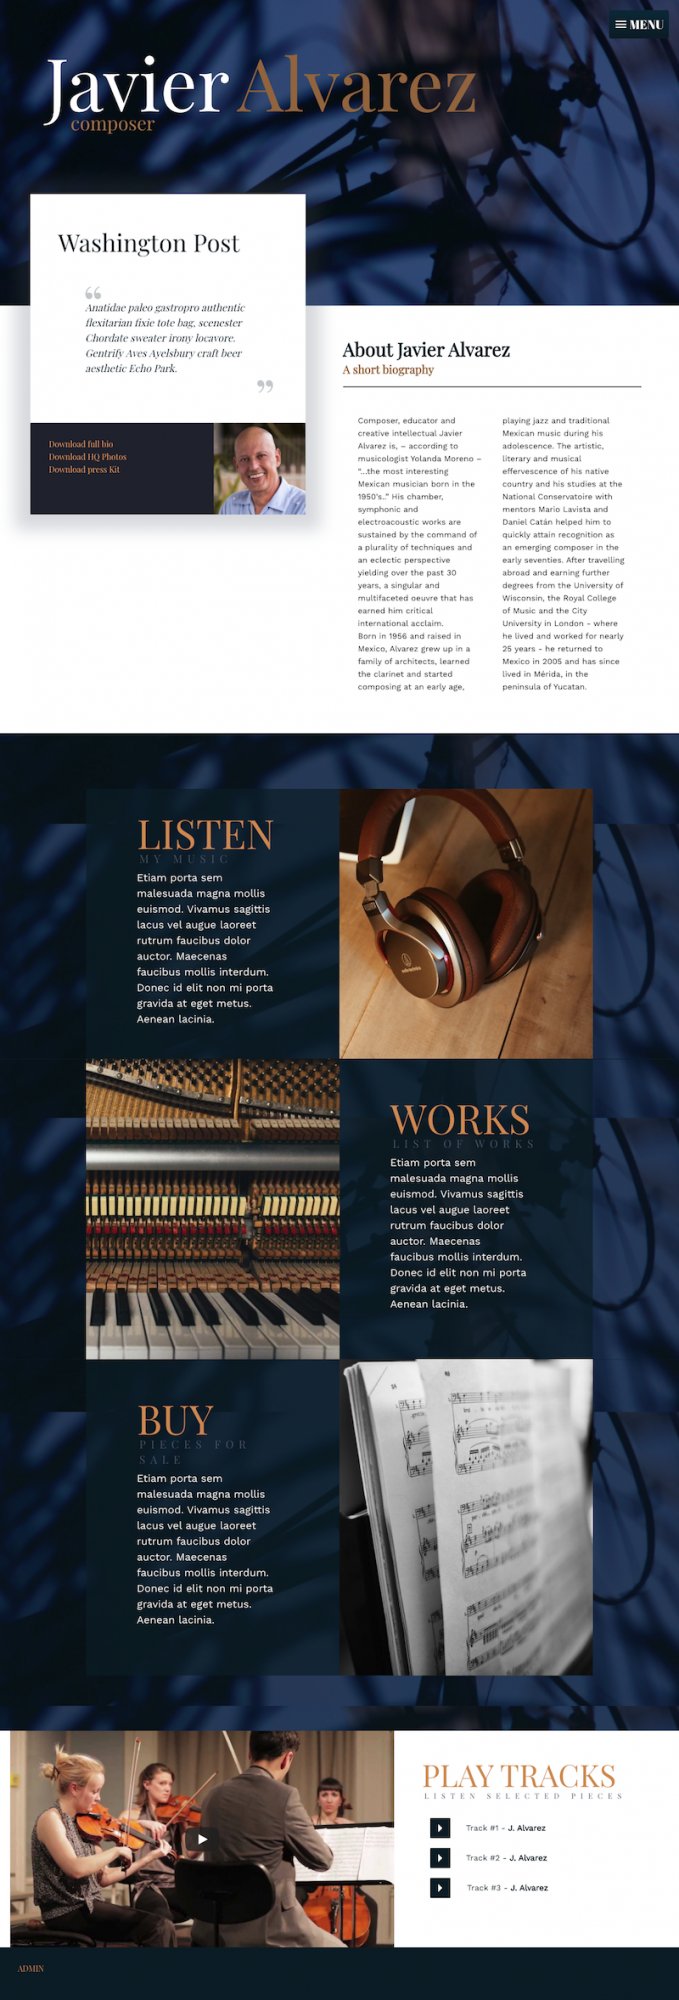 Javier Alvarez website, online digital store, music website for musician, composer, artist